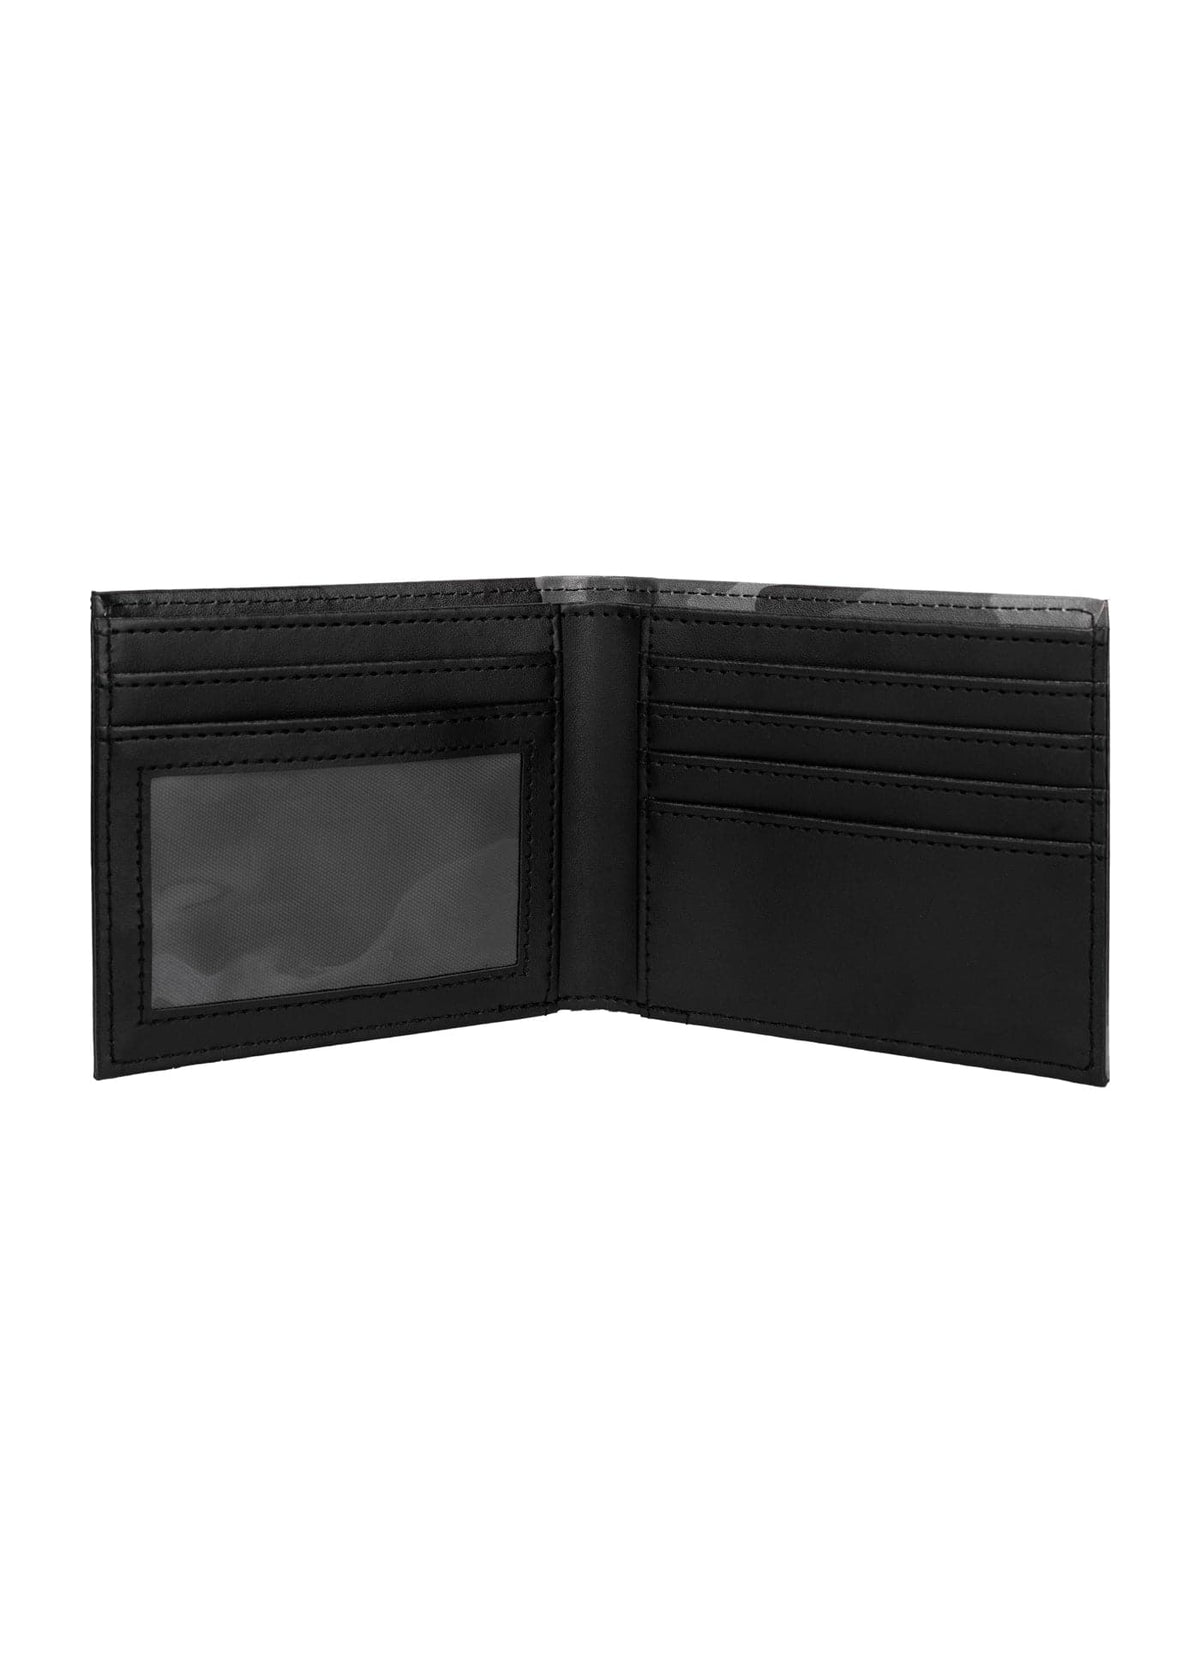 CROSS CAMO Grey Leather Wallet